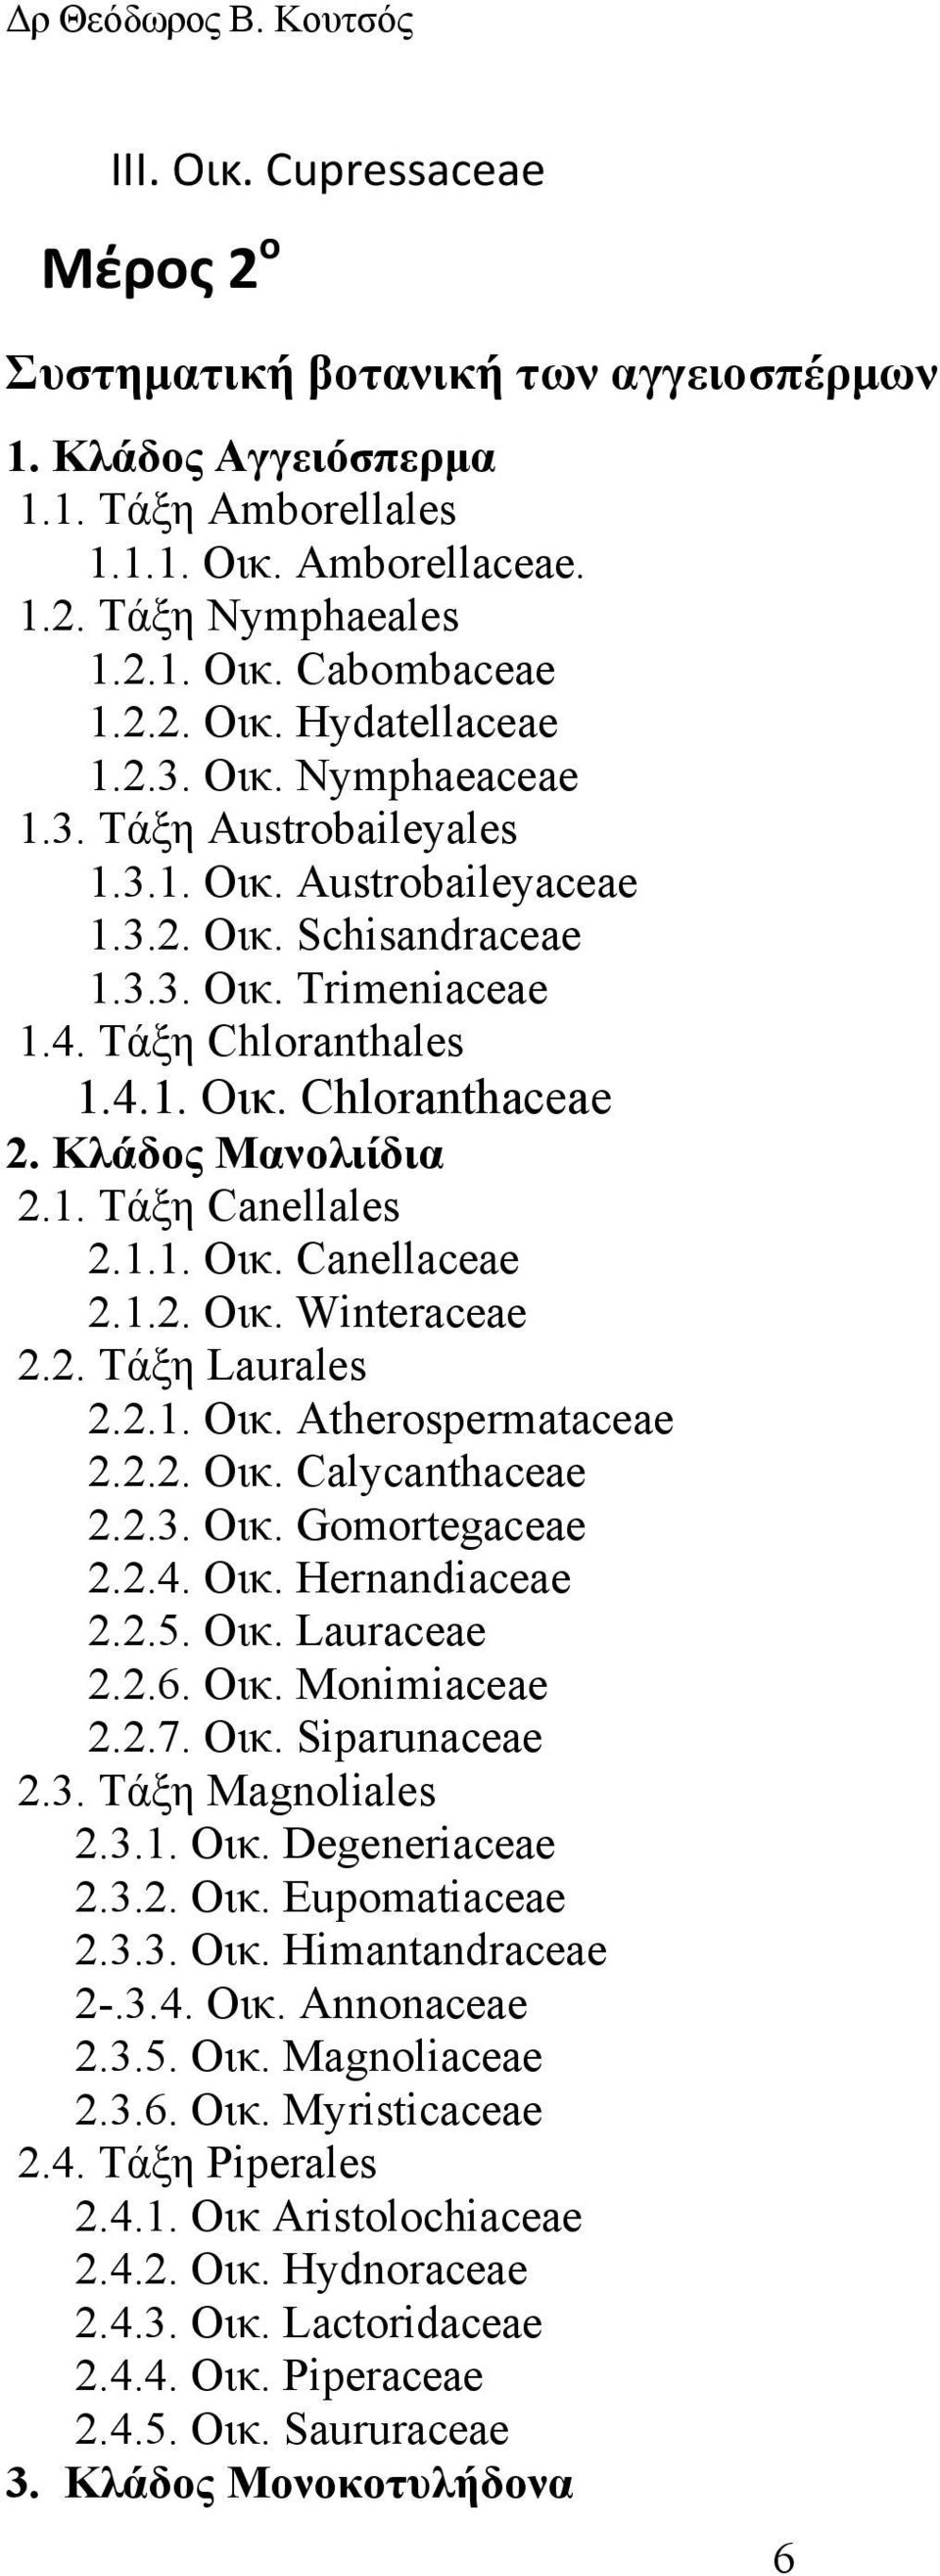 Kλάδος Μανολιίδια 2.1. Τάξη Canellales 2.1.1. Οικ. Canellaceae 2.1.2. Οικ. Winteraceae 2.2. Τάξη Laurales 2.2.1. Οικ. Atherospermataceae 2.2.2. Οικ. Calycanthaceae 2.2.3. Οικ. Gomortegaceae 2.2.4.